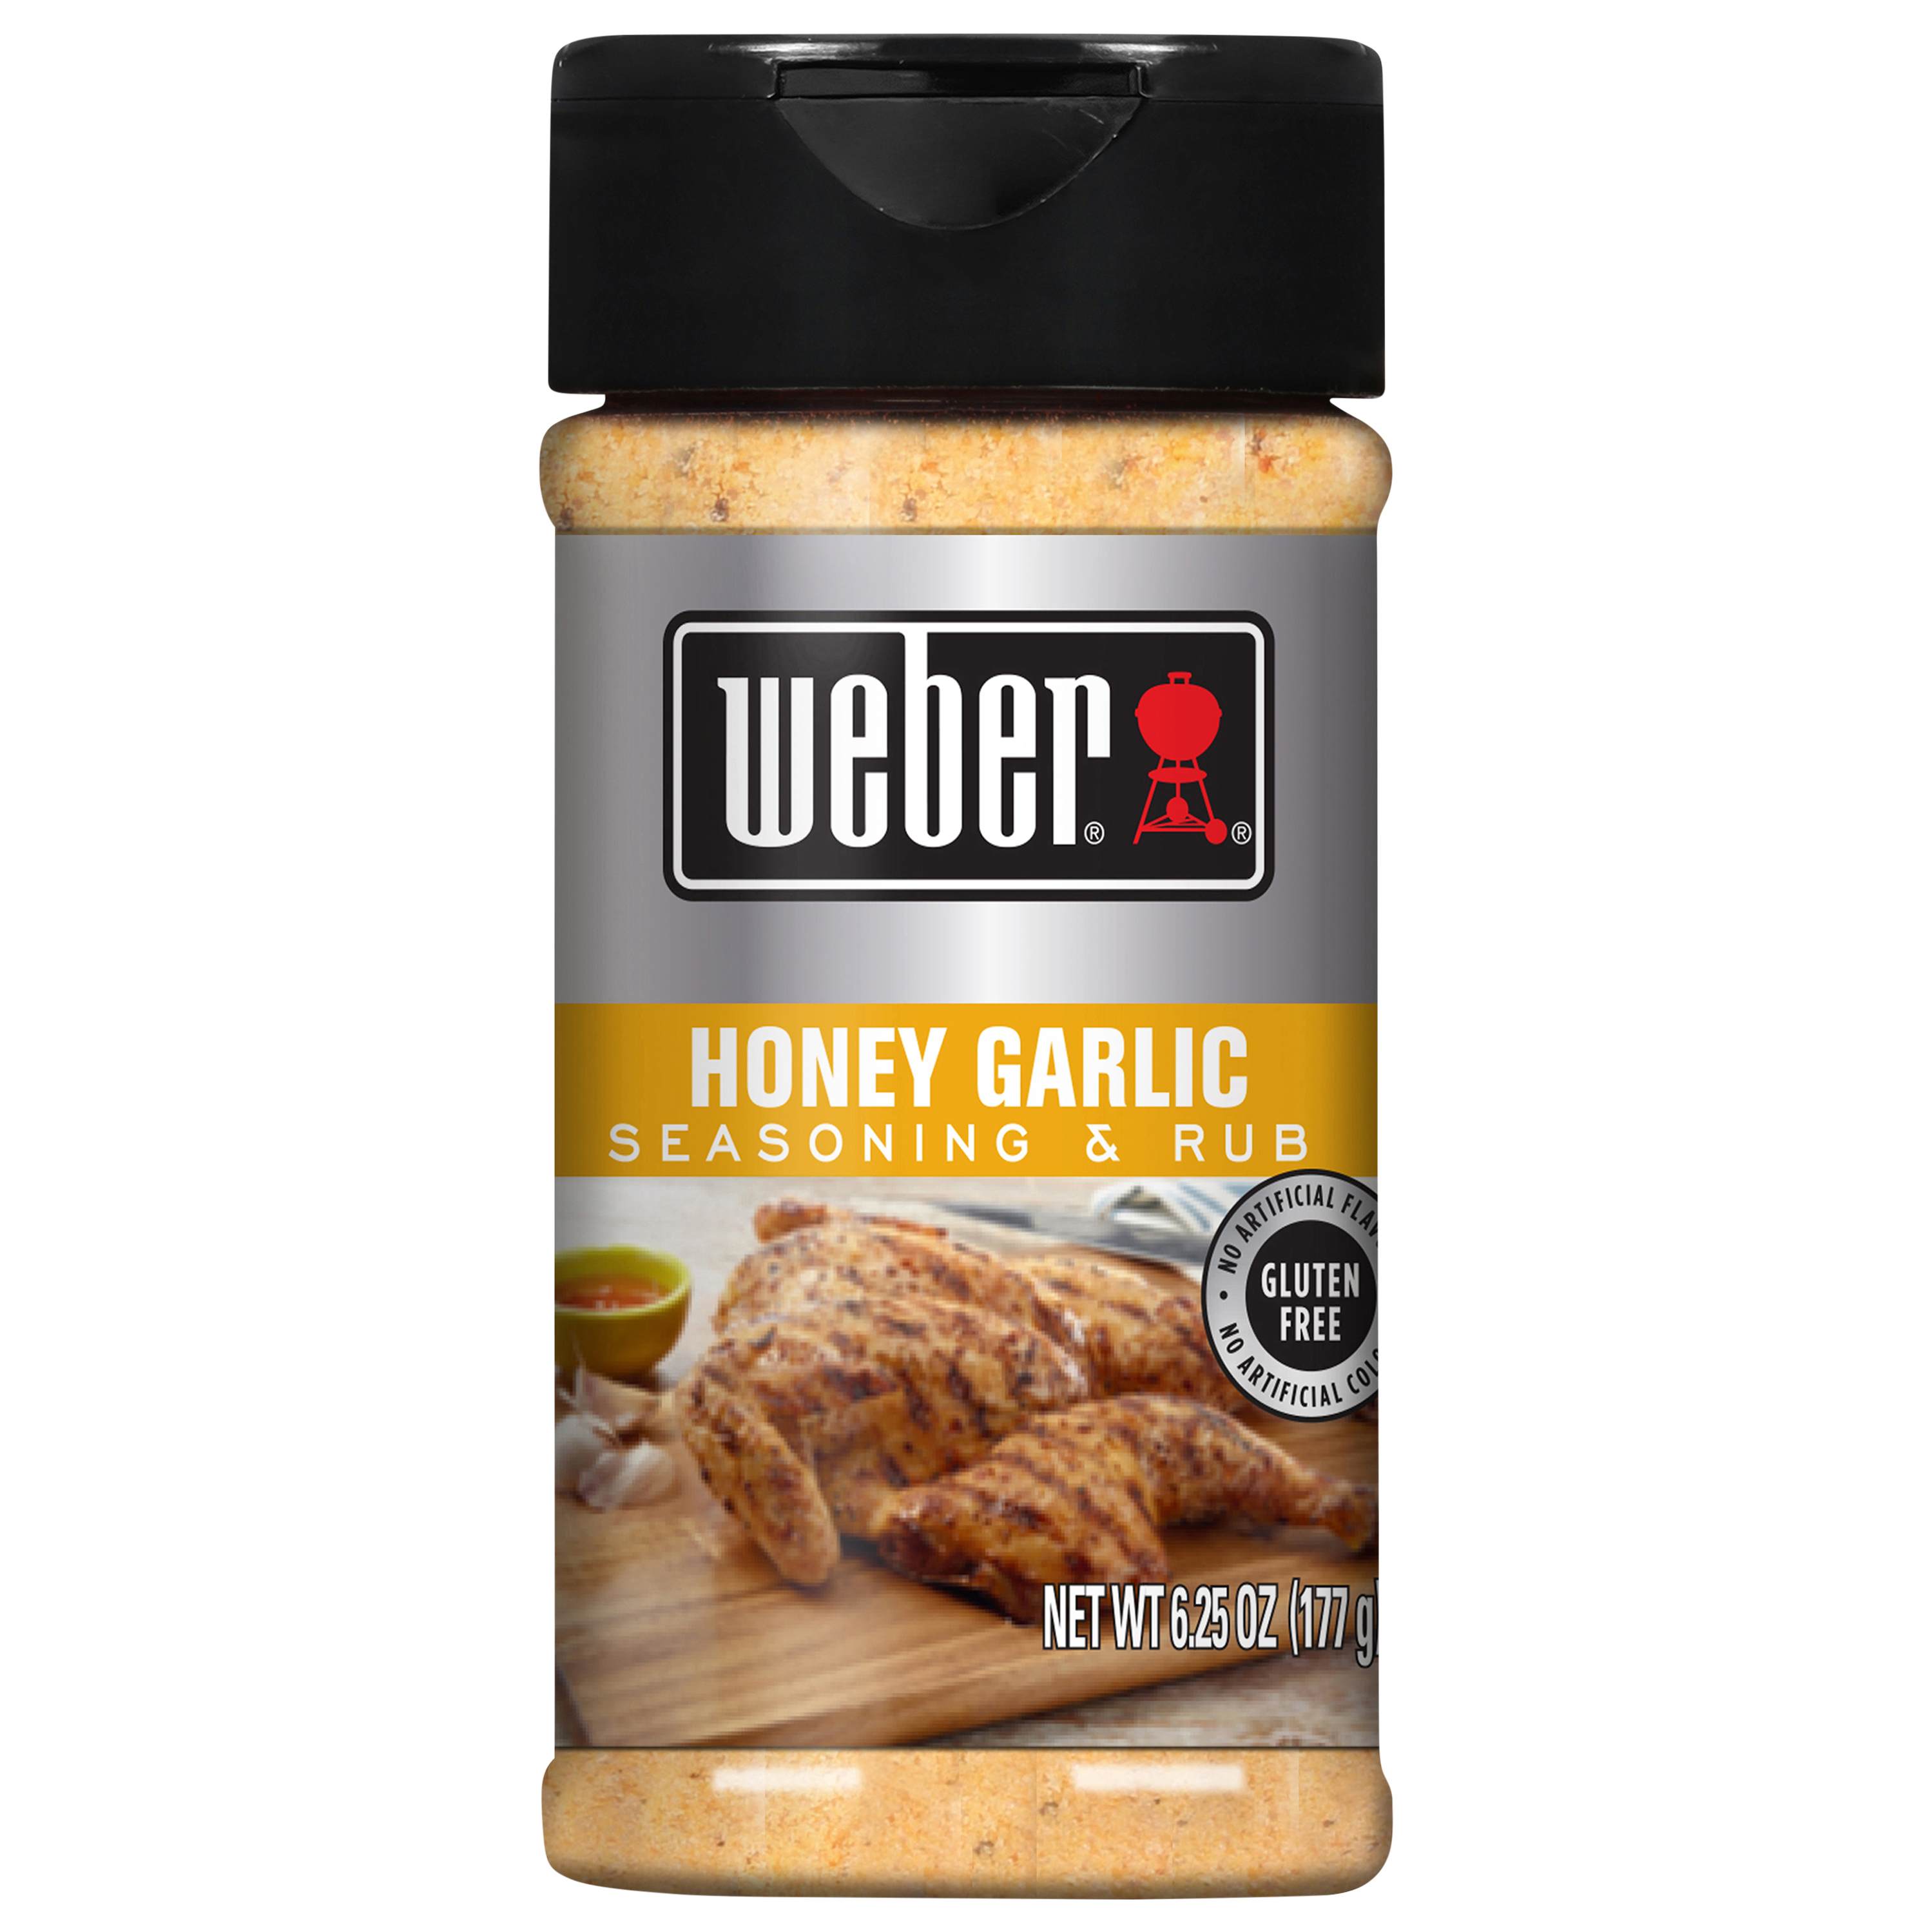 Weber Honey Garlic Seasoning and Rub, 6.25 oz - image 1 of 9